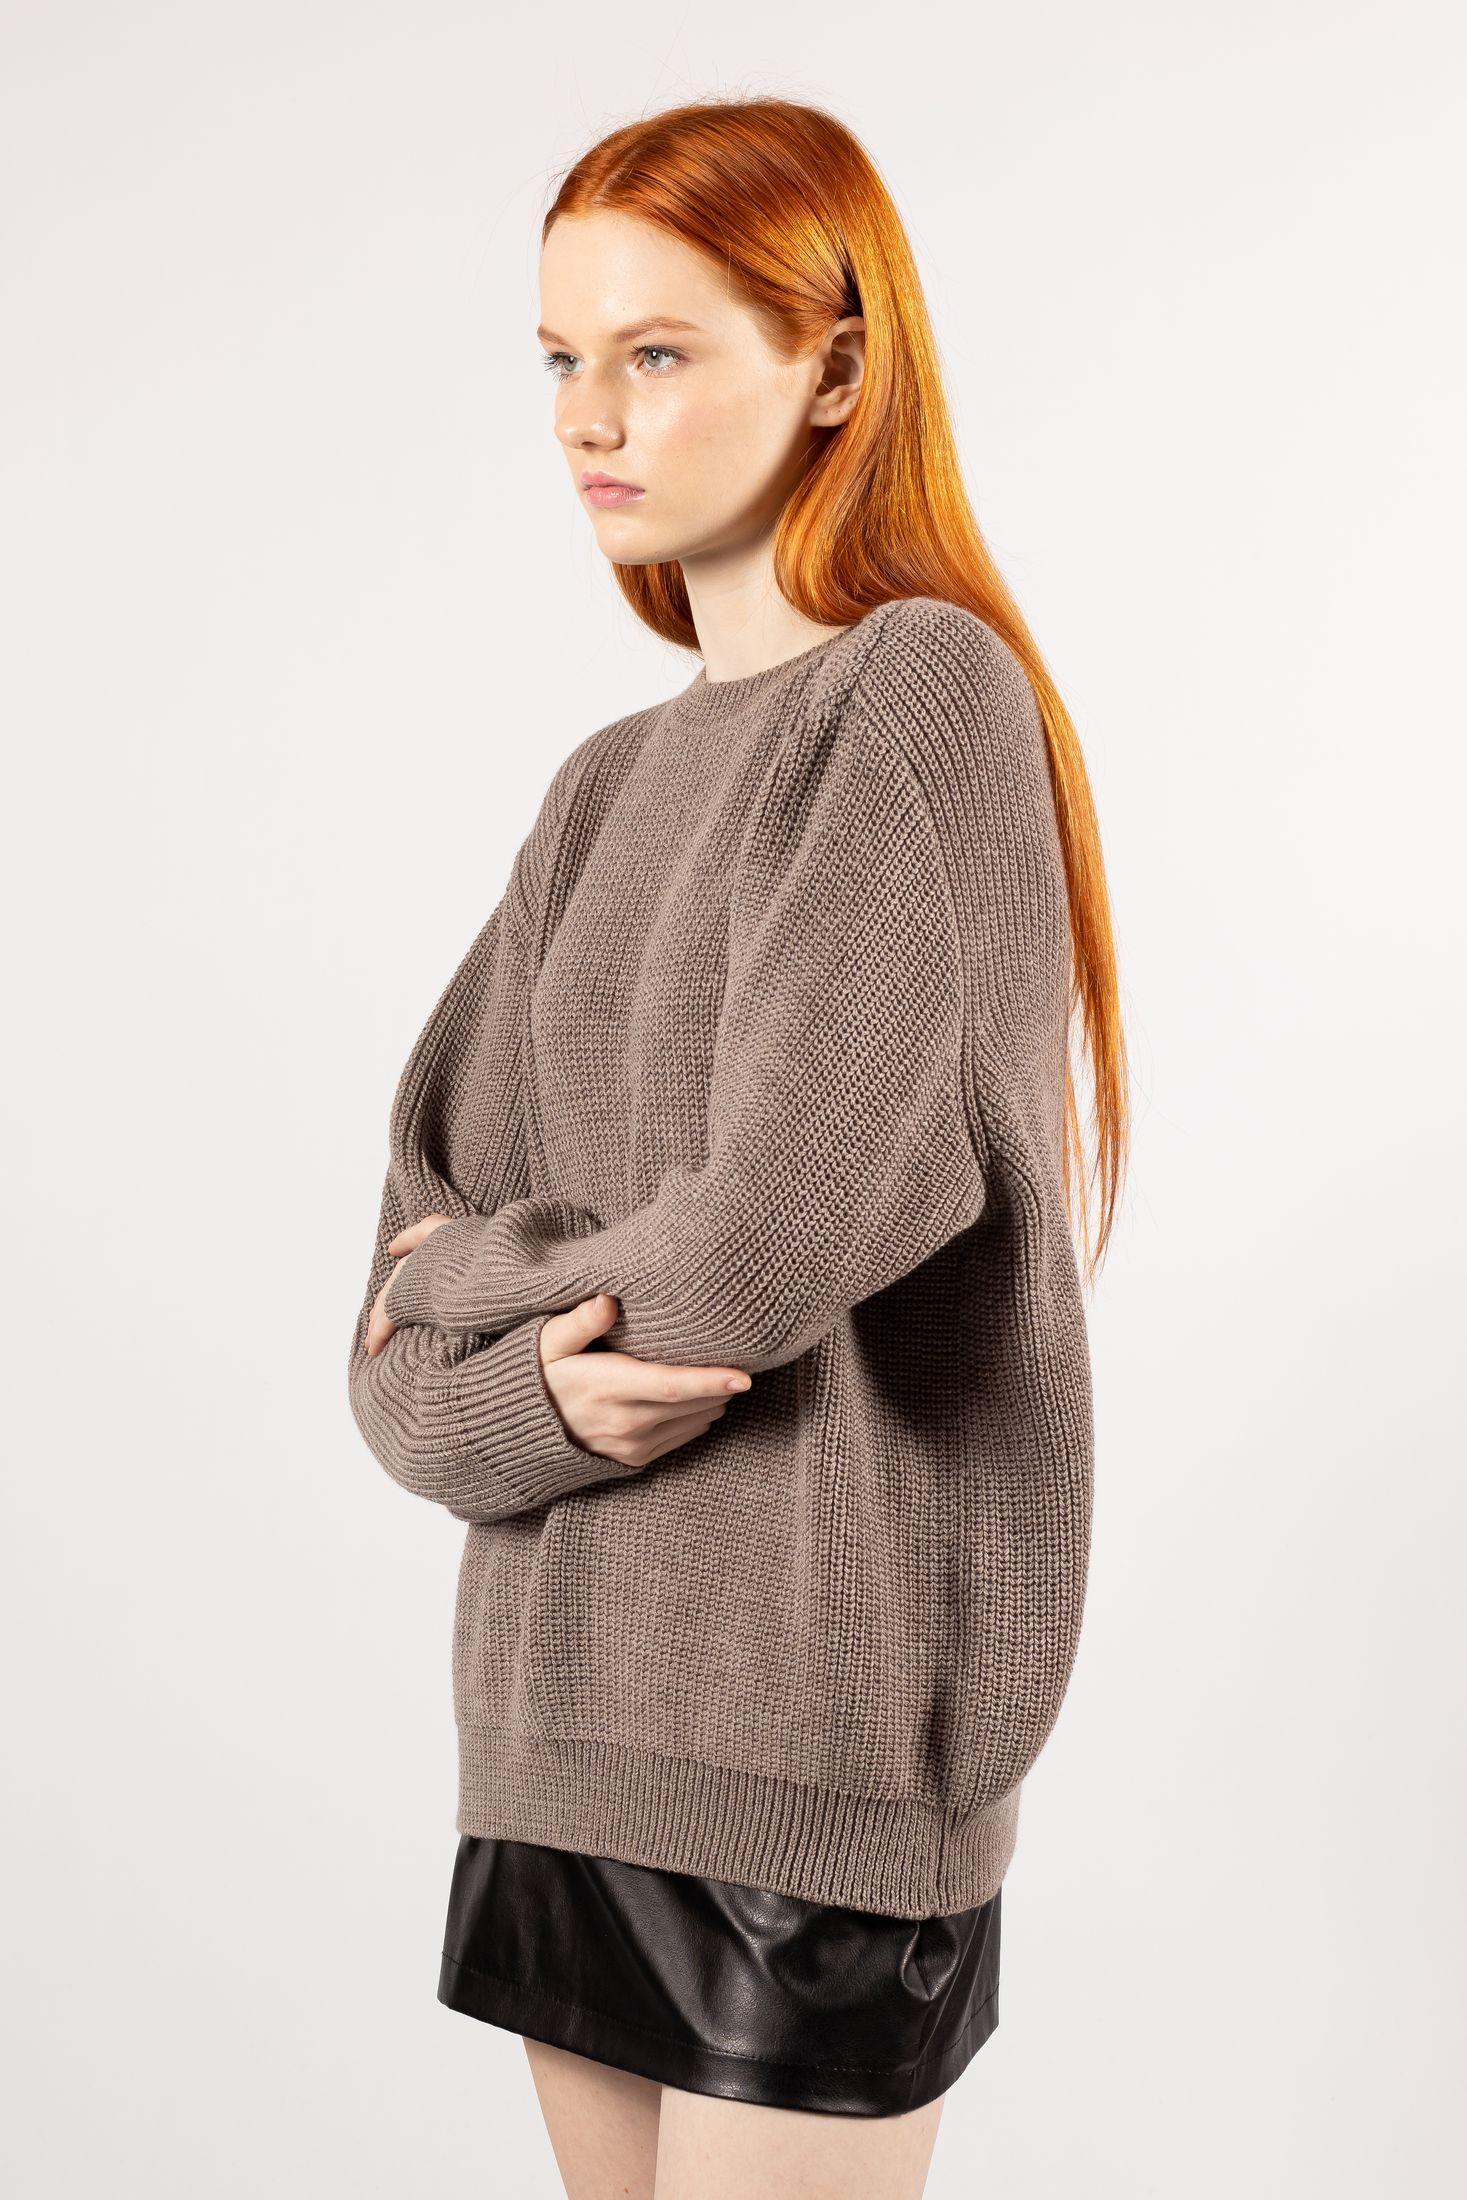 Brown merino wool sweater jumper, detachable collar.